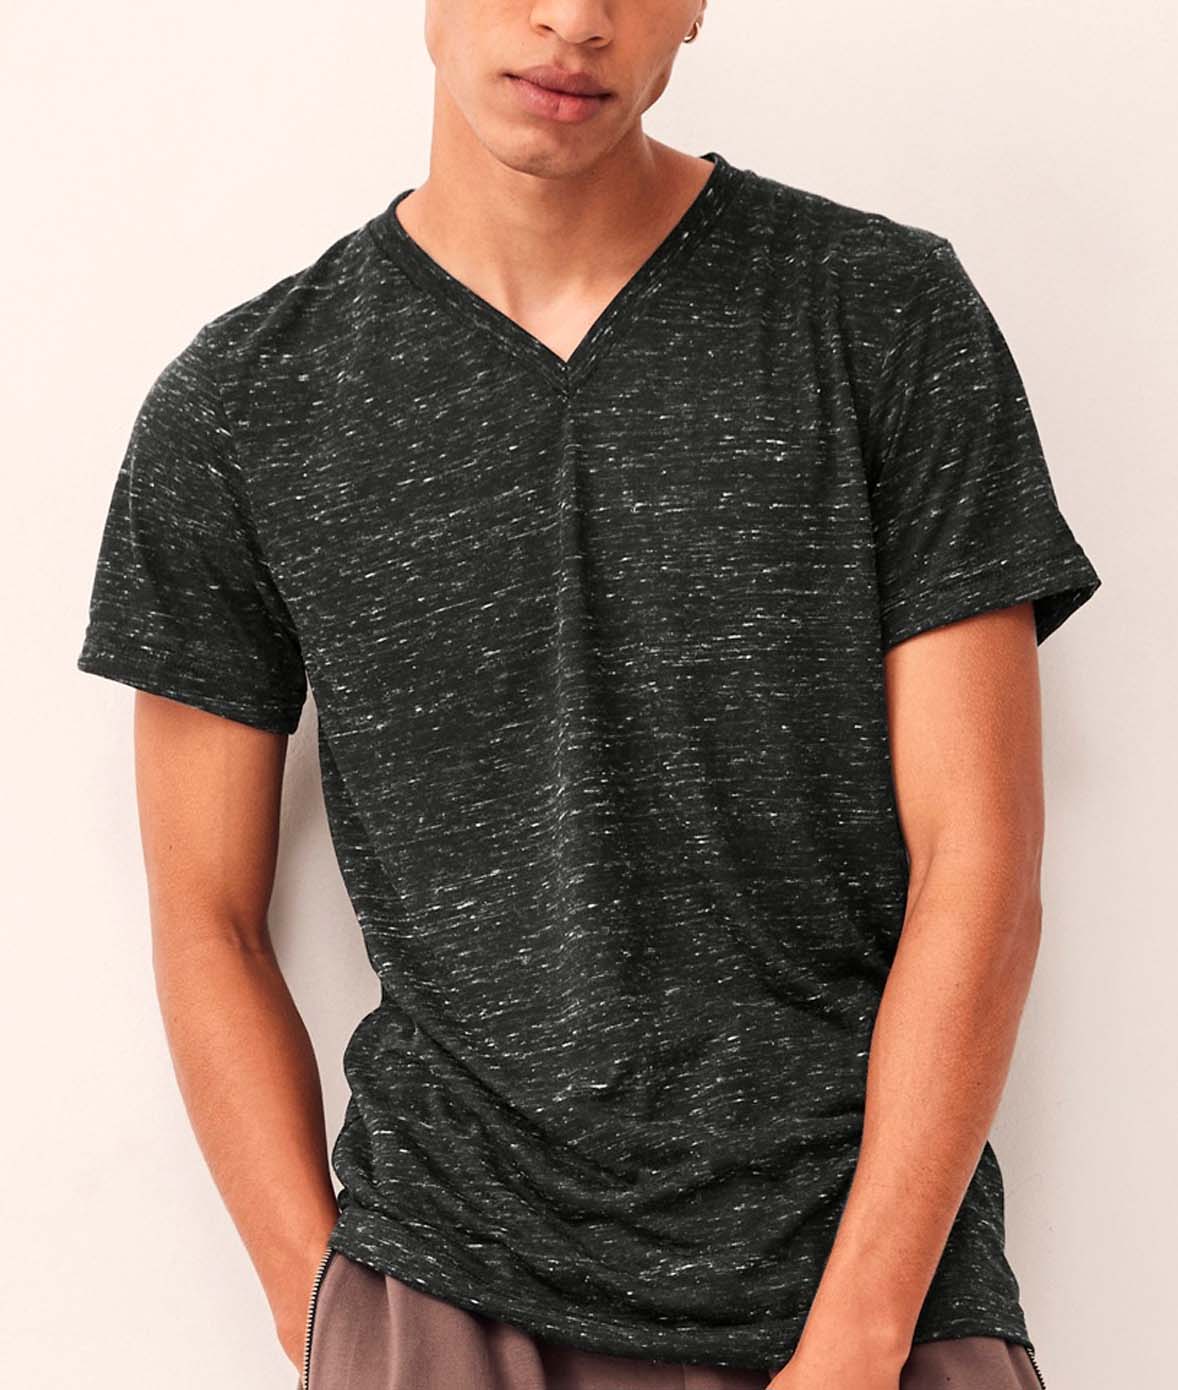 Men's Marbled Jersey V-Neck T-Shirt Worn by Model